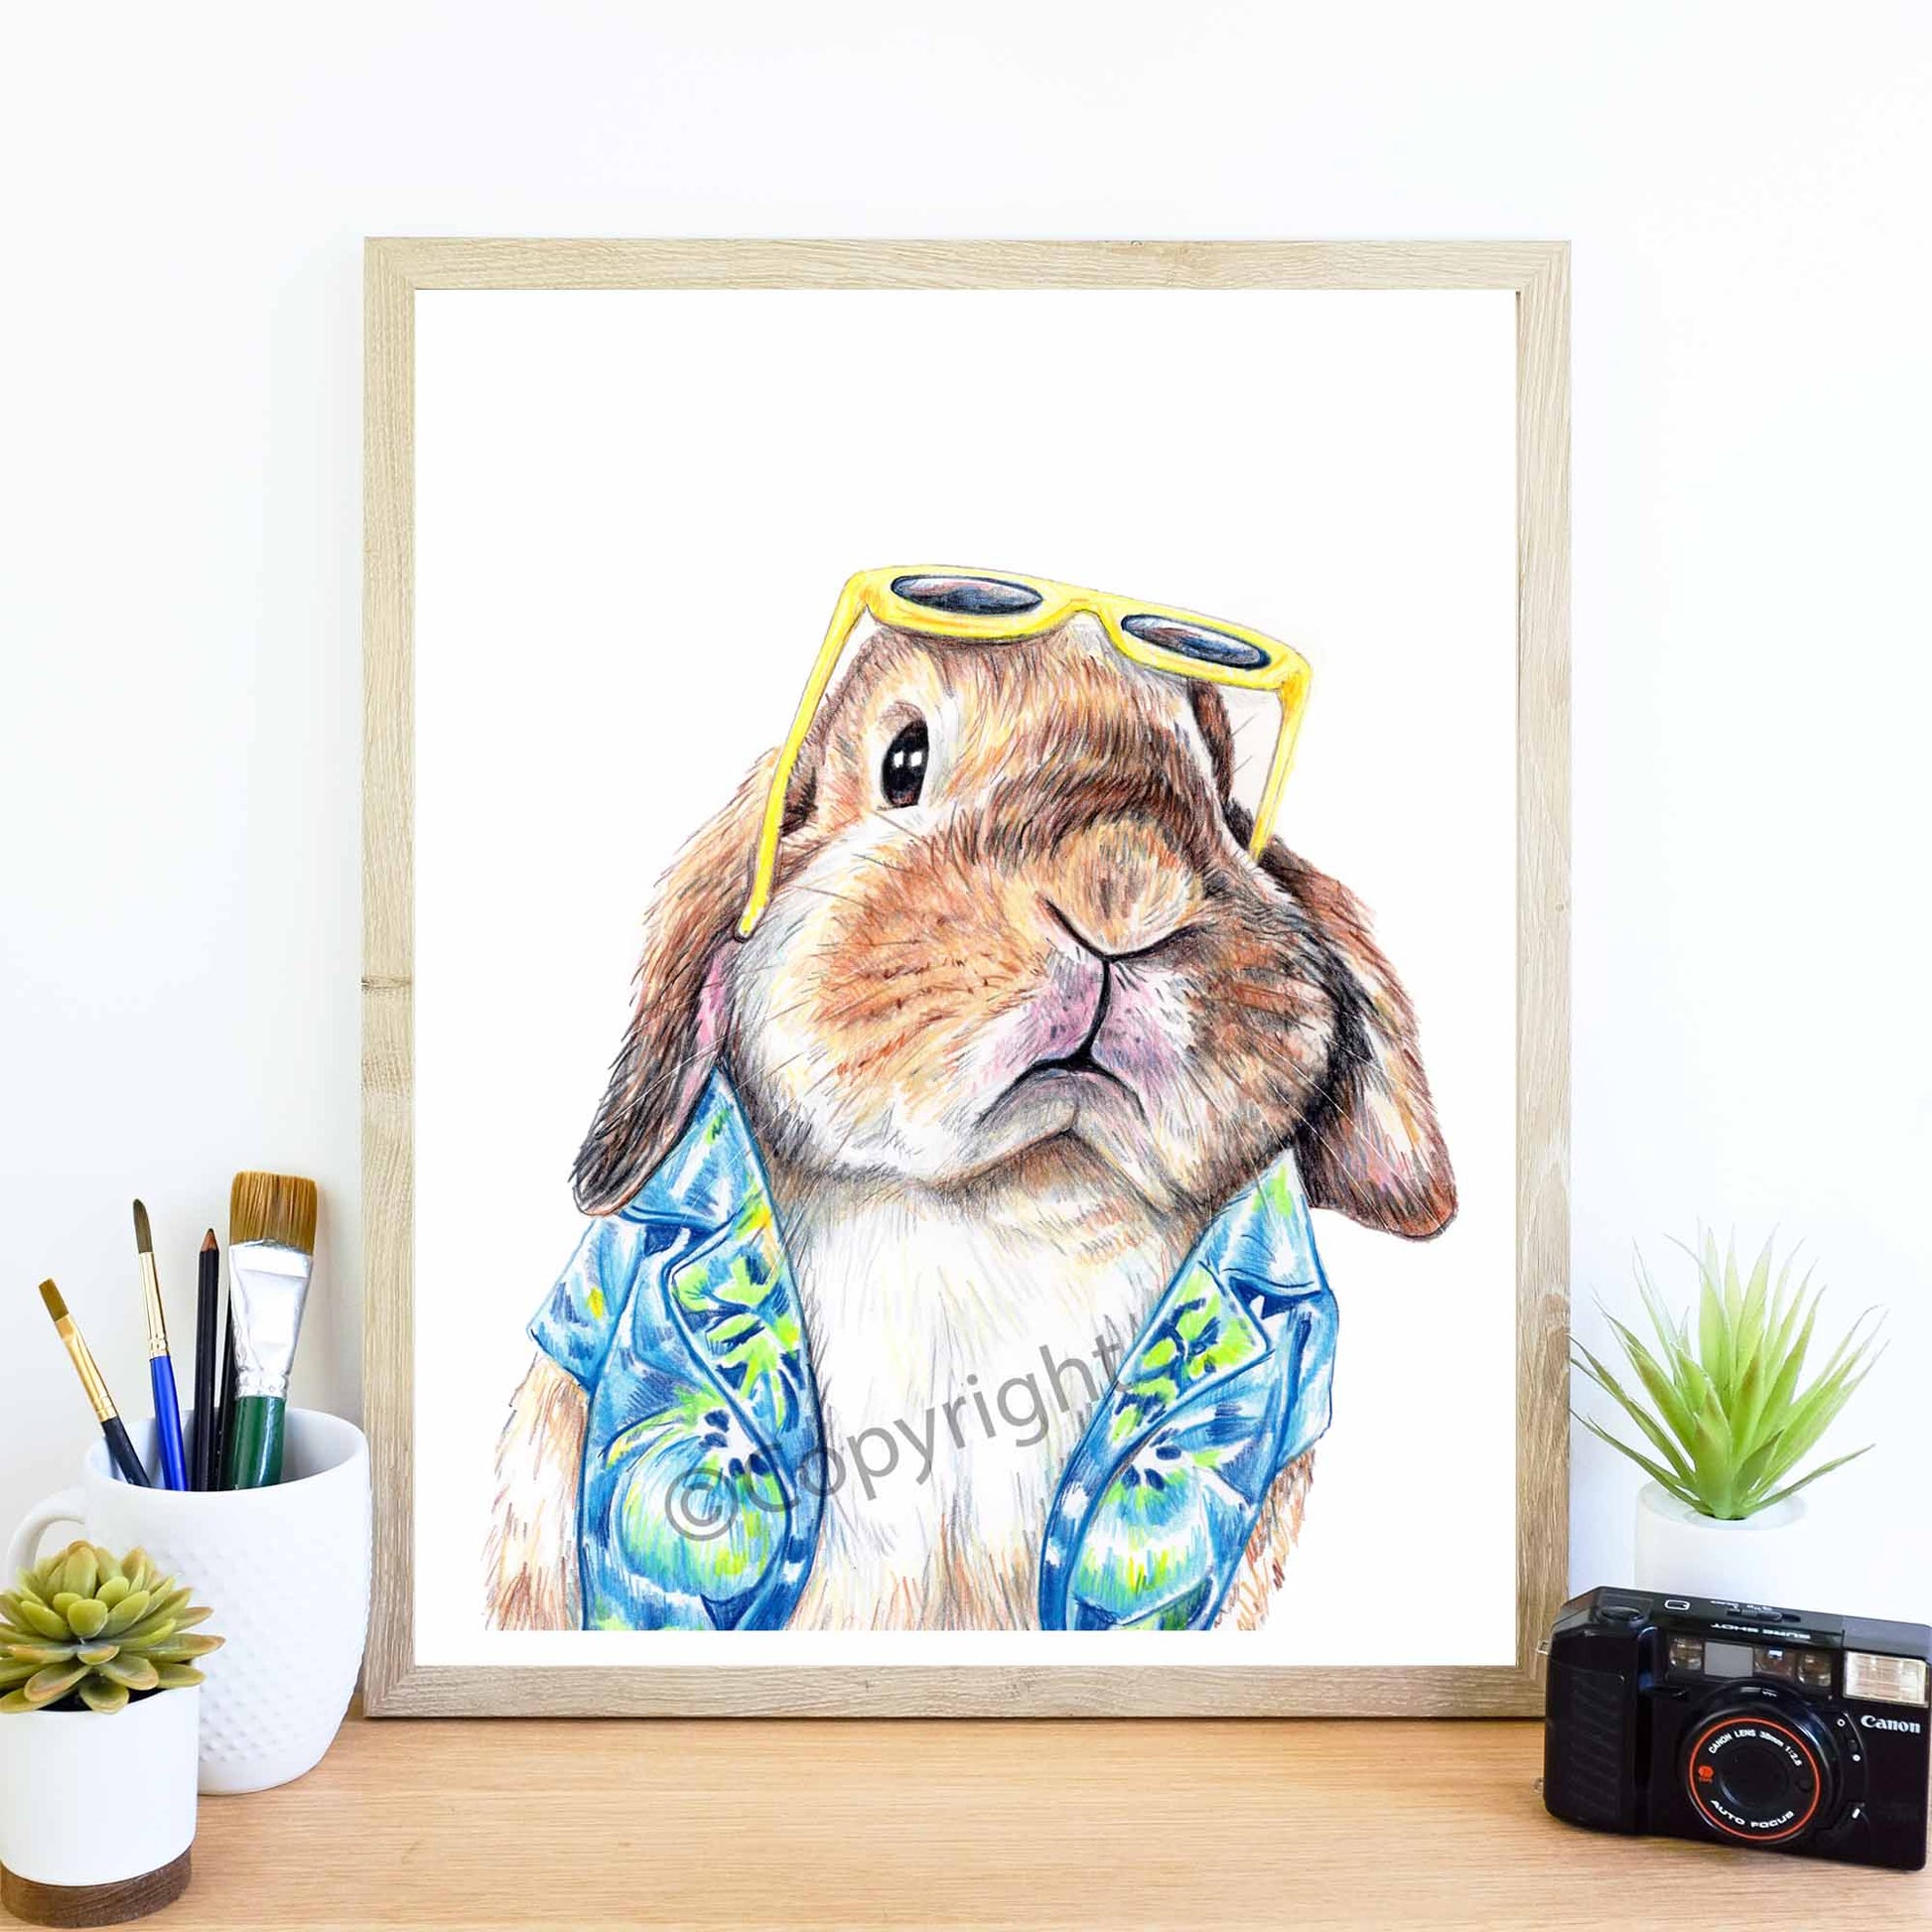 Print of drawing of a lop eared bunny rabbit wearing a Hawaiian shirt. Original crayon pastel drawing by Deidre Wicks